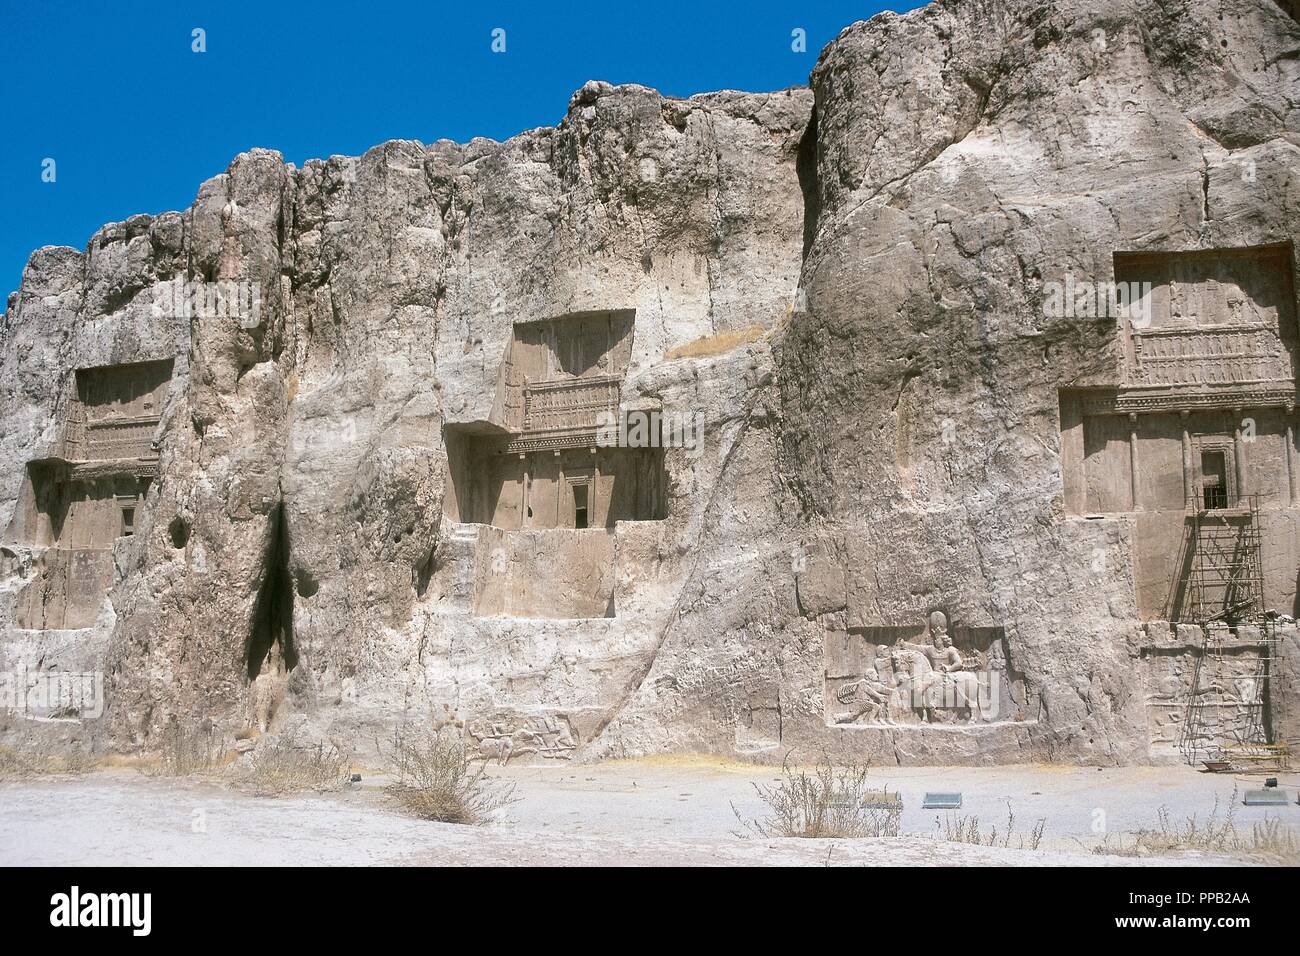 Persian Art. Achaemenid Period. 6th and 5th century B.C. Tombs of kings Darius I, Xerxes I and Darius II, carved into the rock. Necropolis of Naqsh-e Rustam. Around Persepolis. Iran. Stock Photo